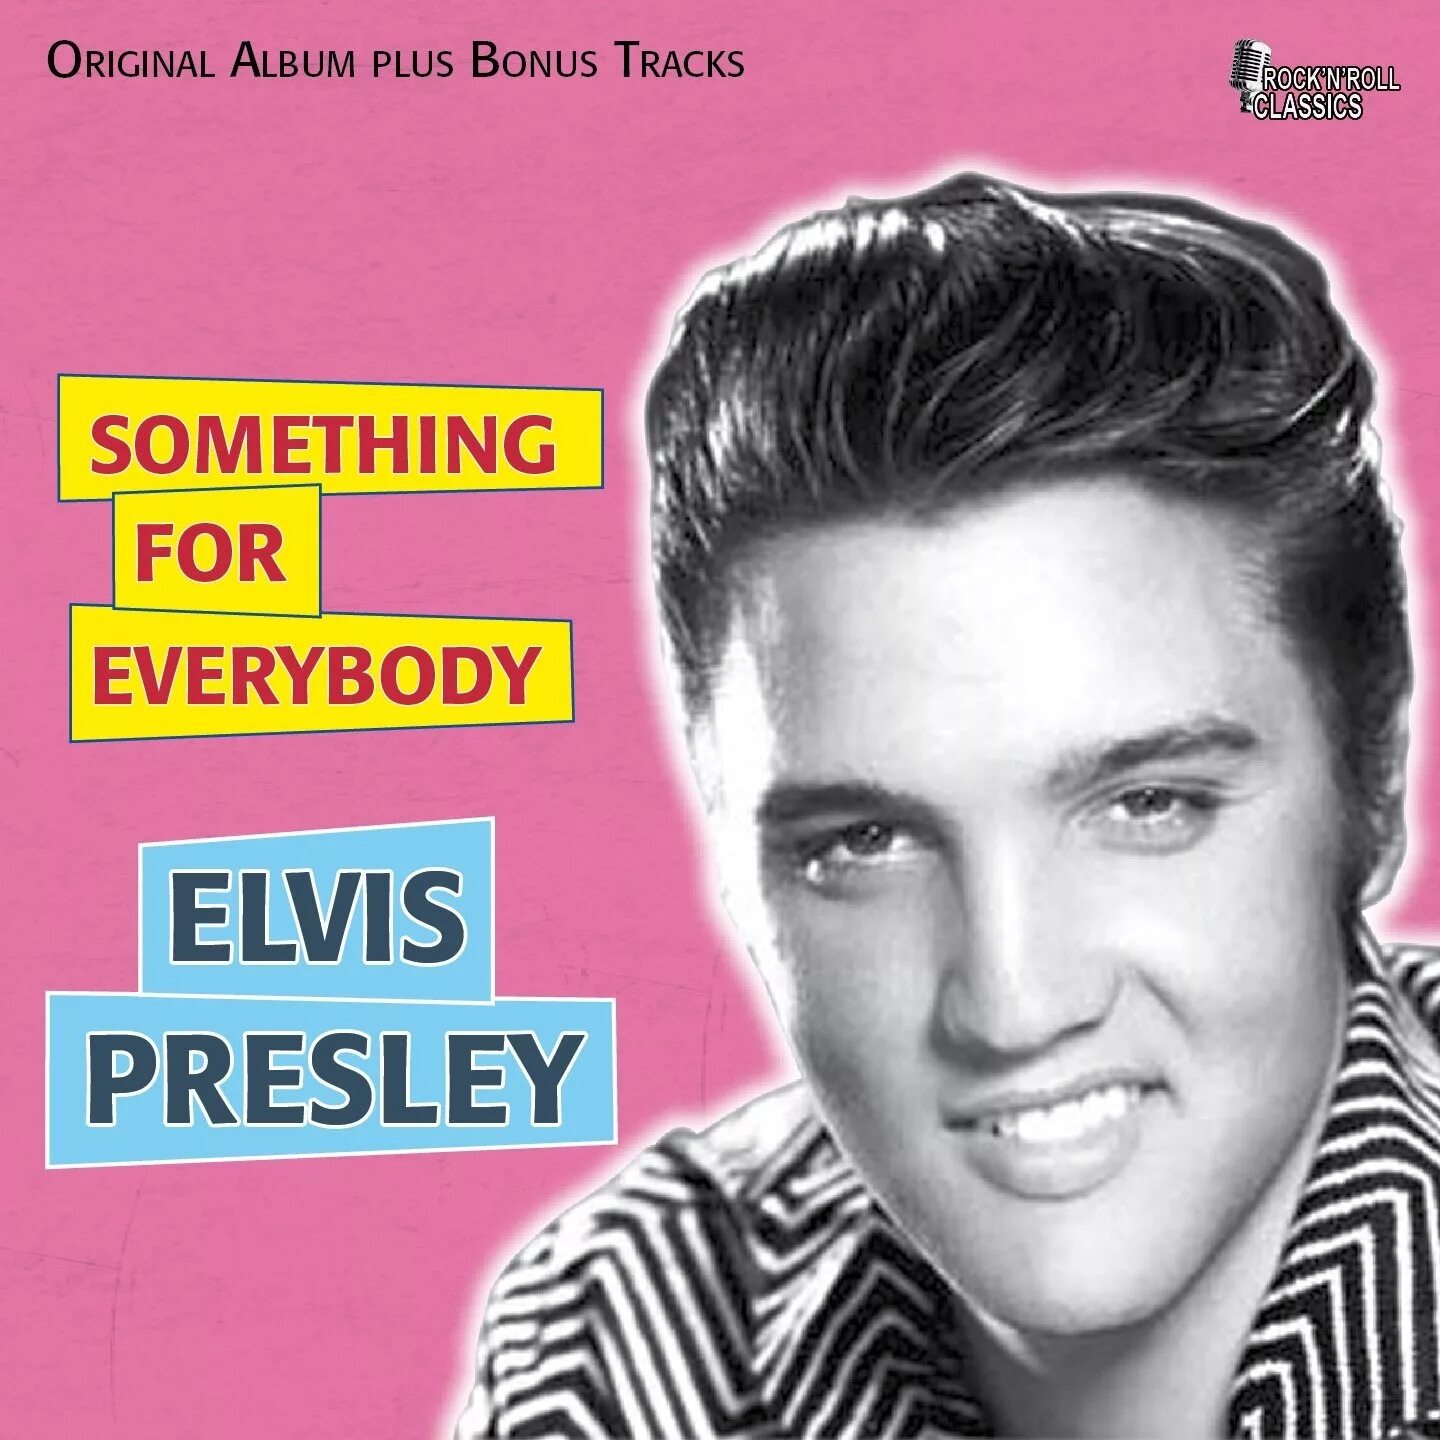 Something for everyone. King Creole Элвис Пресли. Elvis Presley - King Creole (LP 1958). Something for Everybody Элвис Пресли. Elvis Presley 1961 альбом.